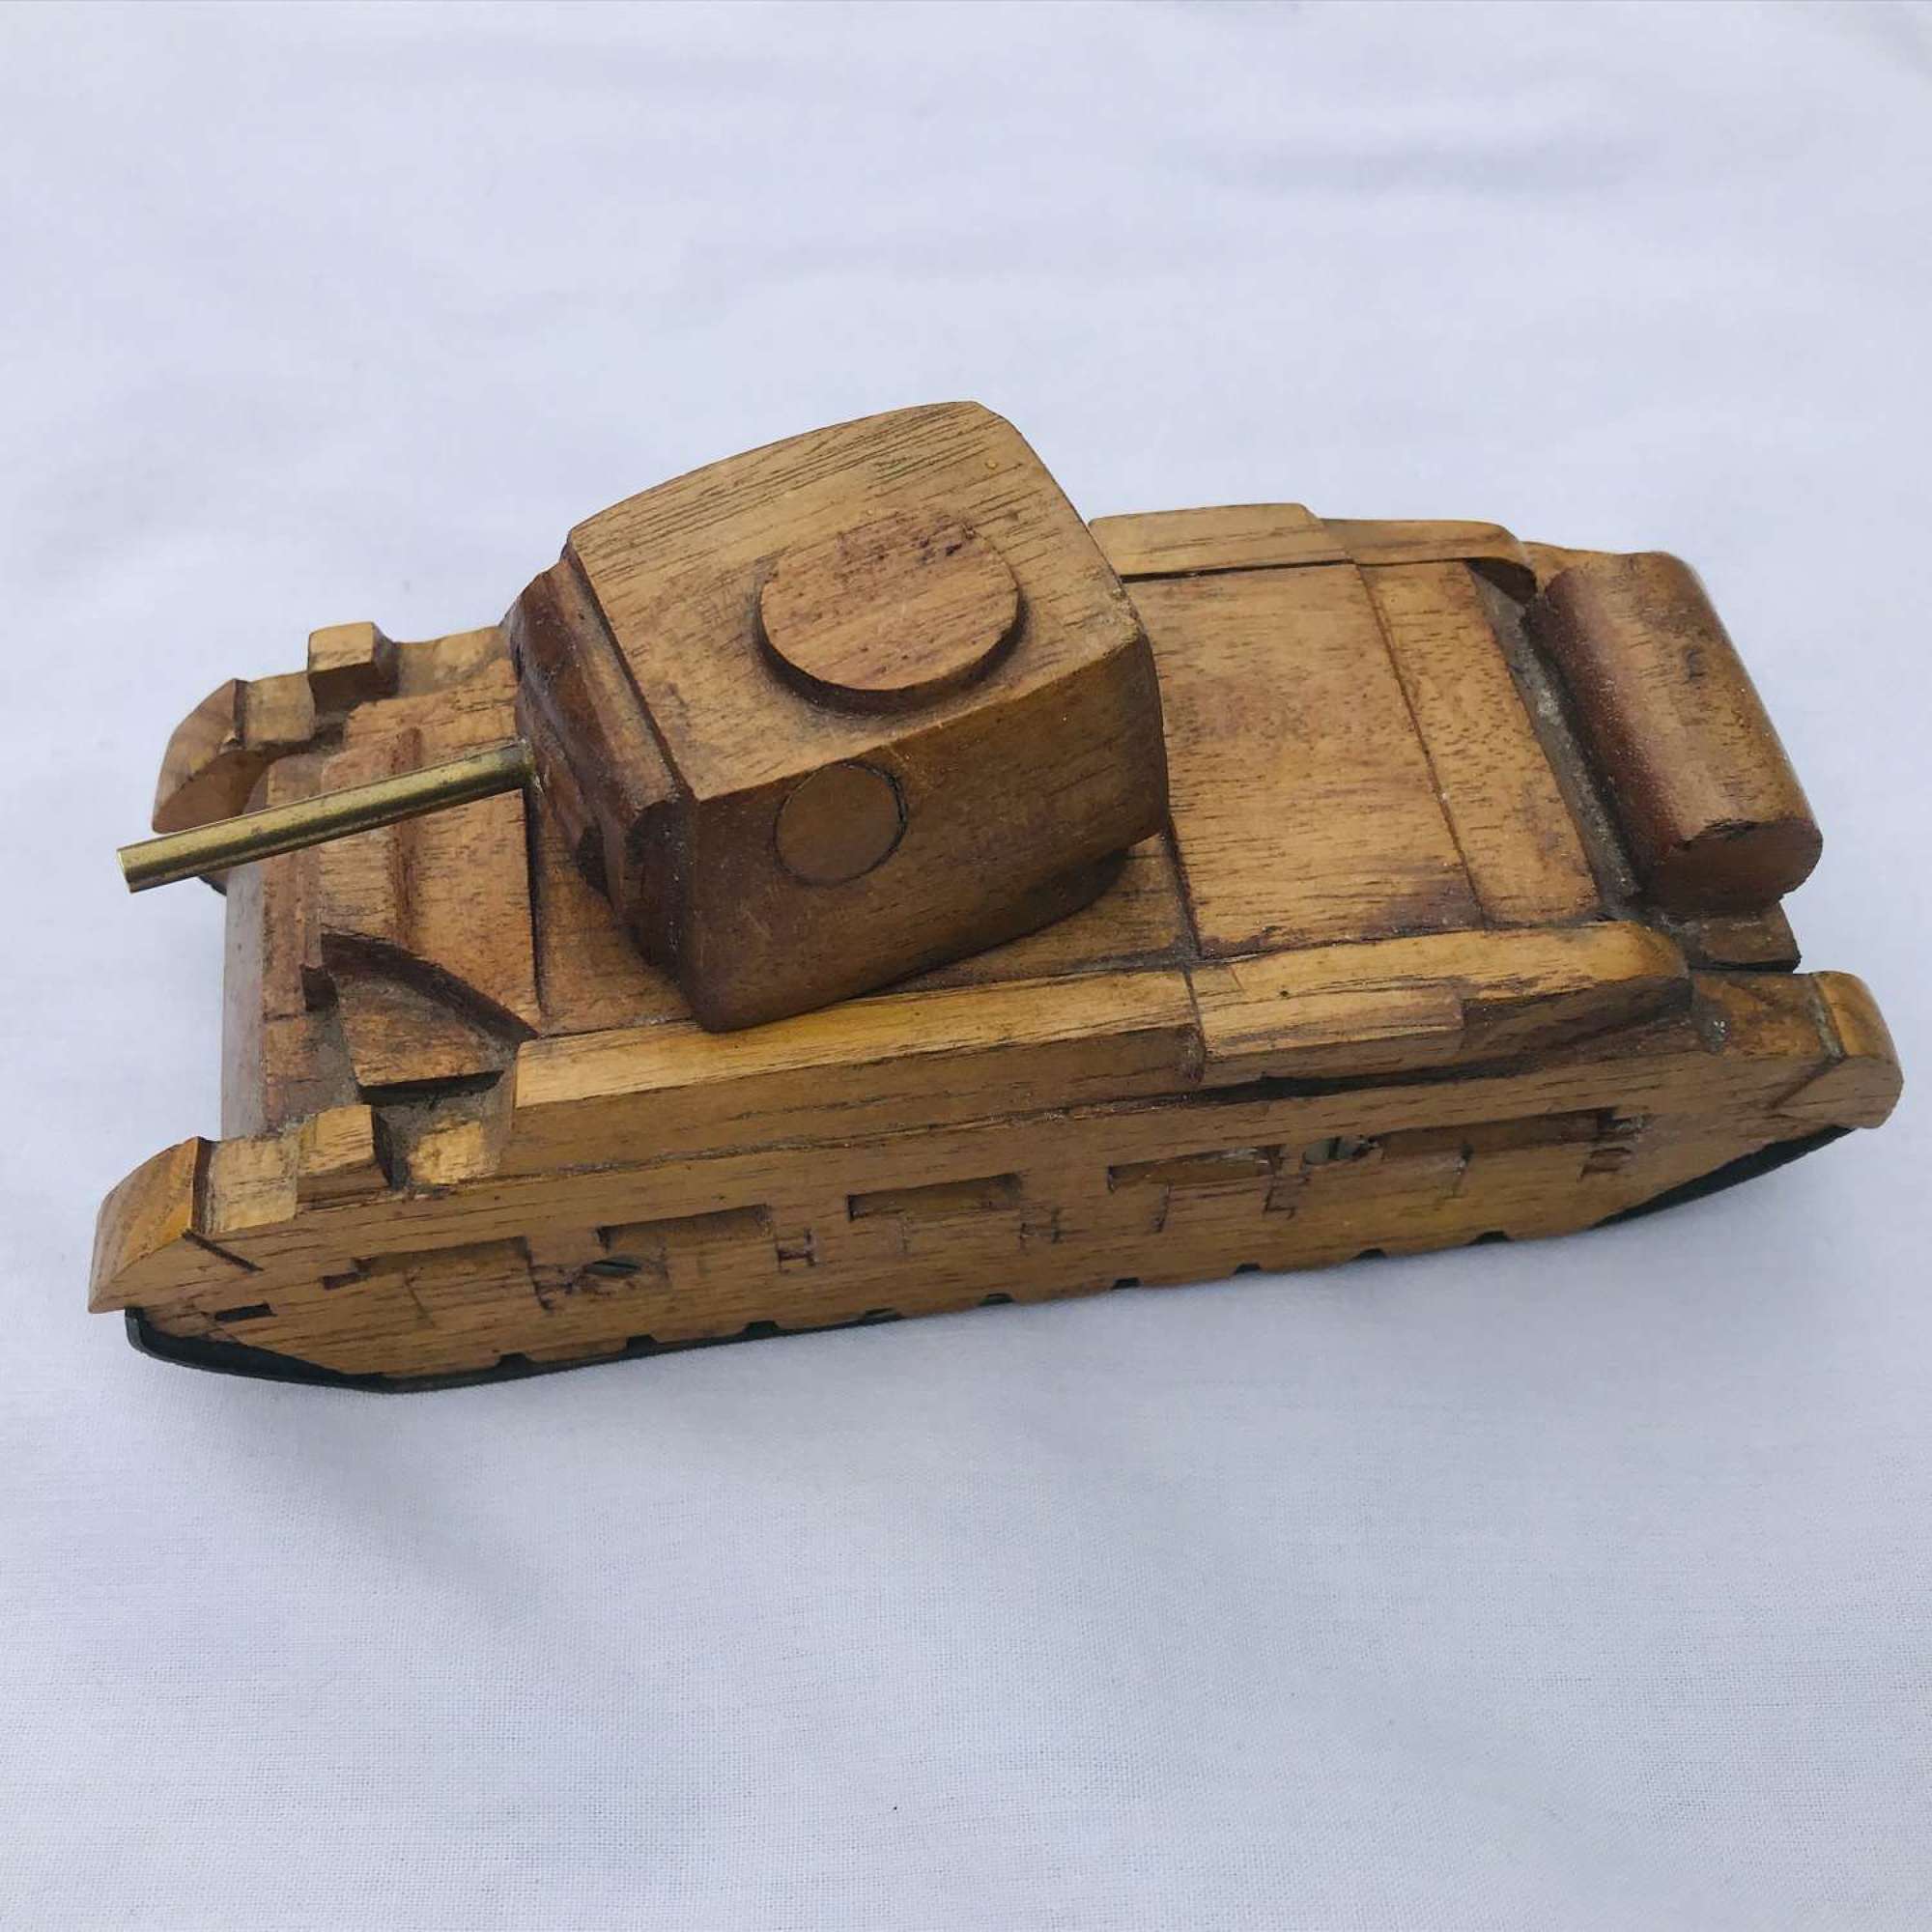 Hand made model of British Matilda Tank